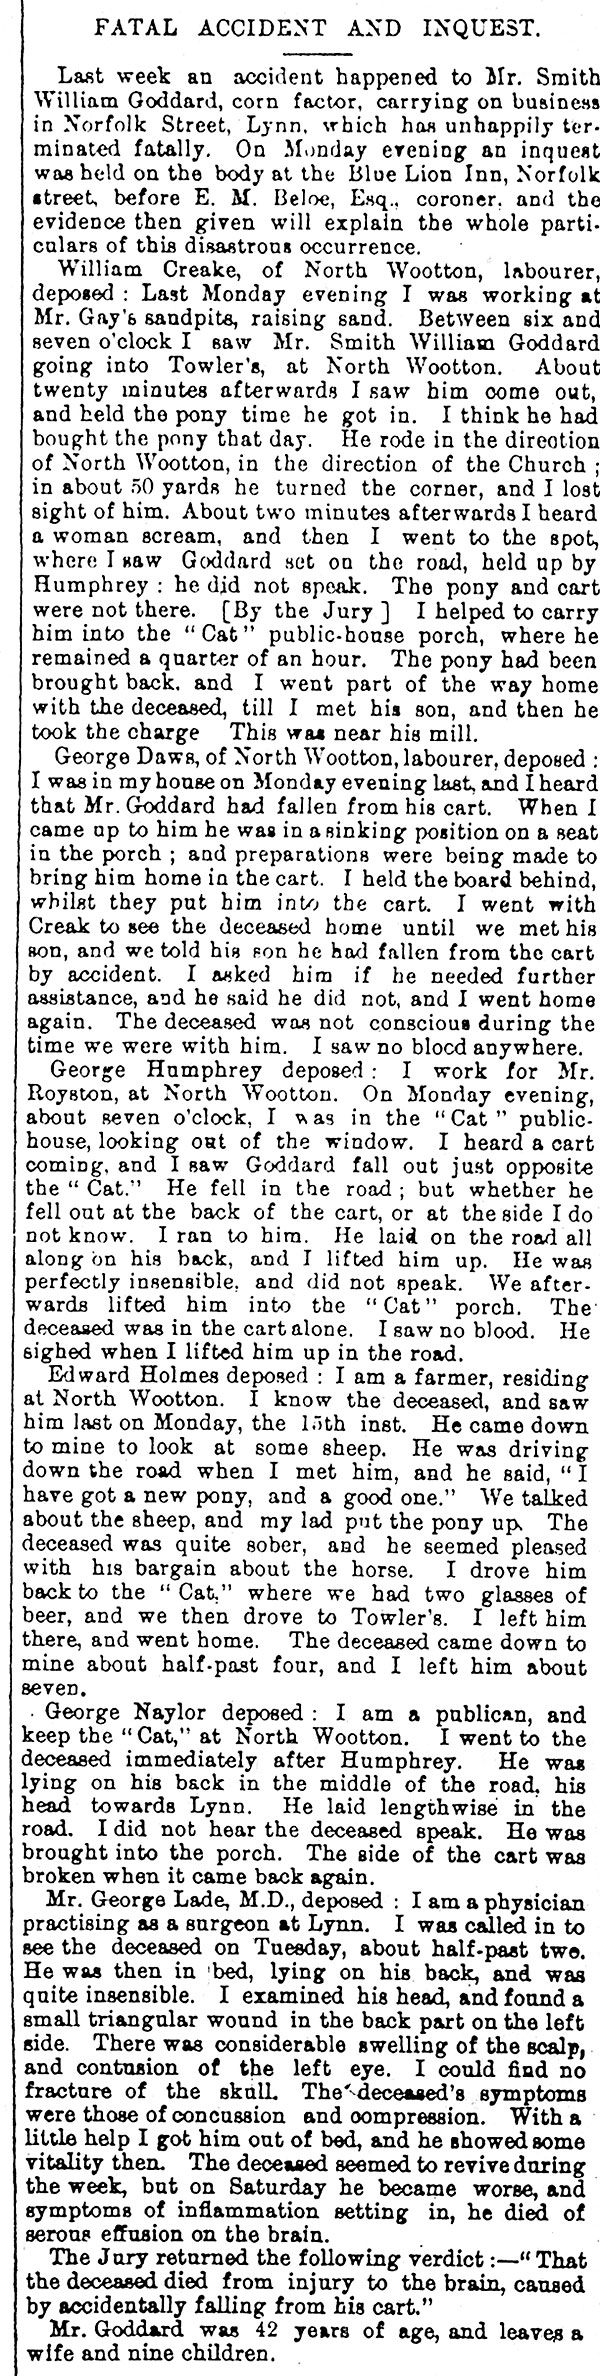 Lynn News - 27th May 1871